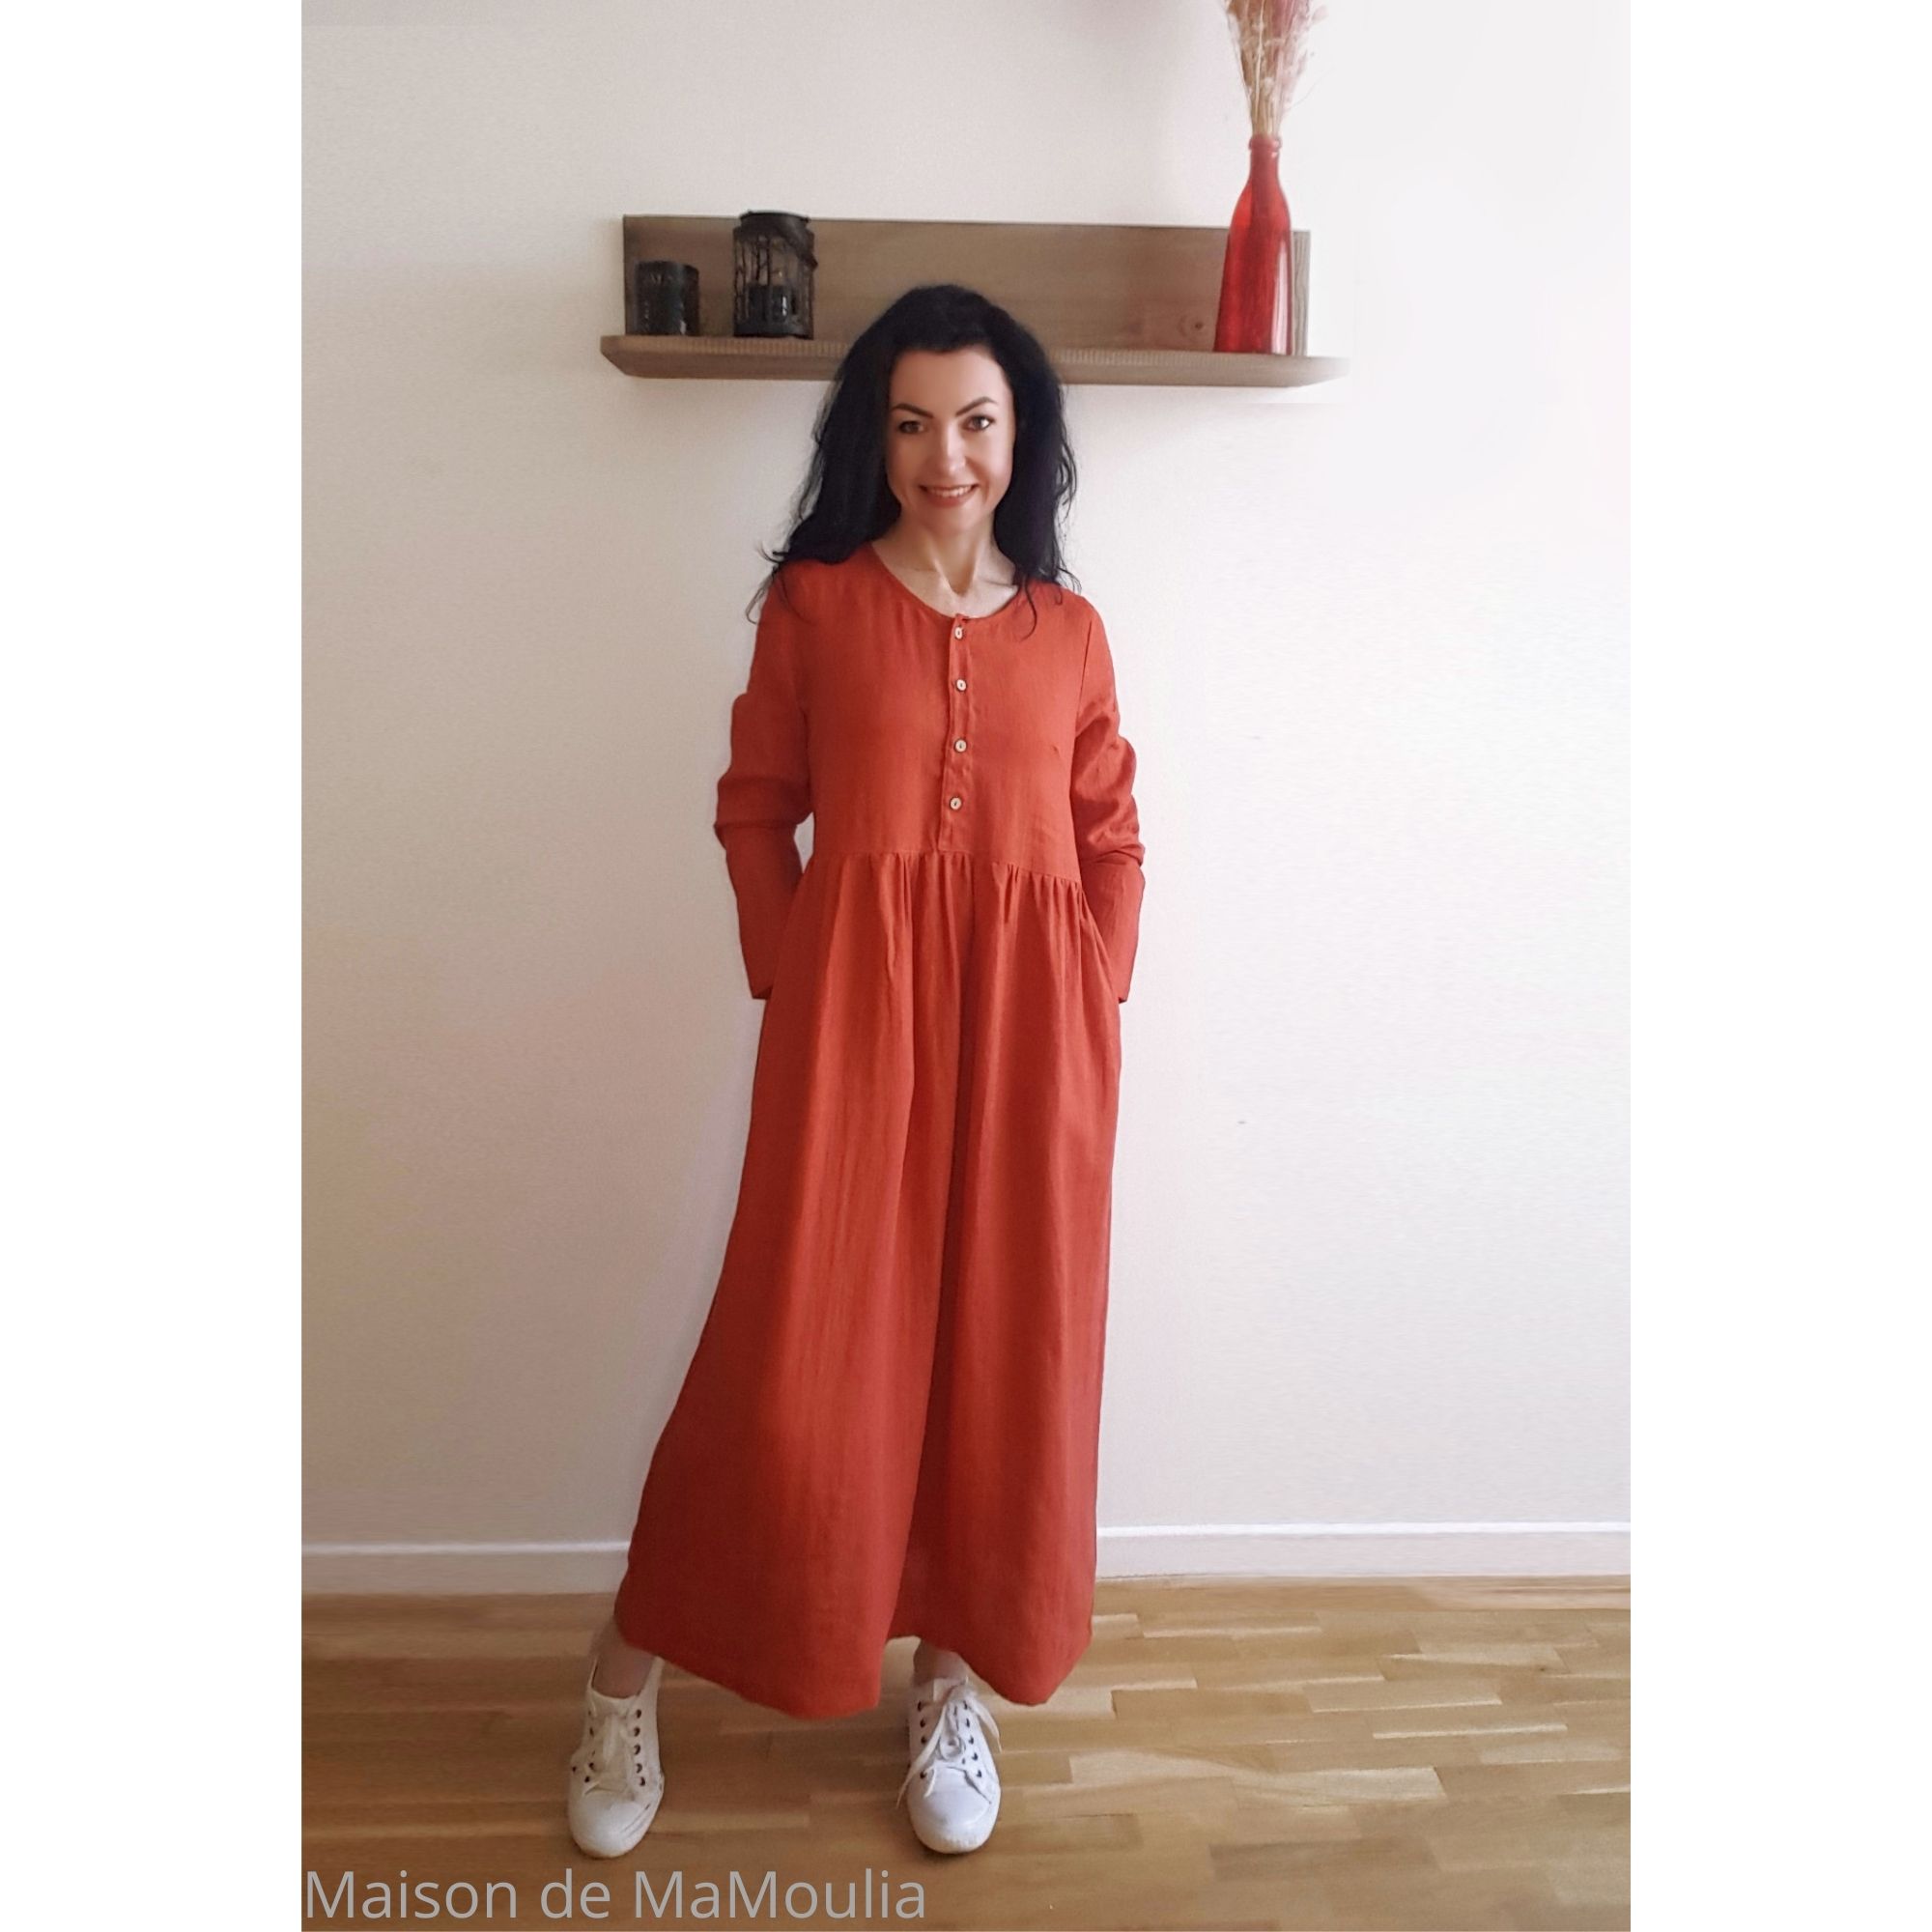 SIMPLY GREY - Robe très longue Boho femme - 100% lin lavé - Rouge